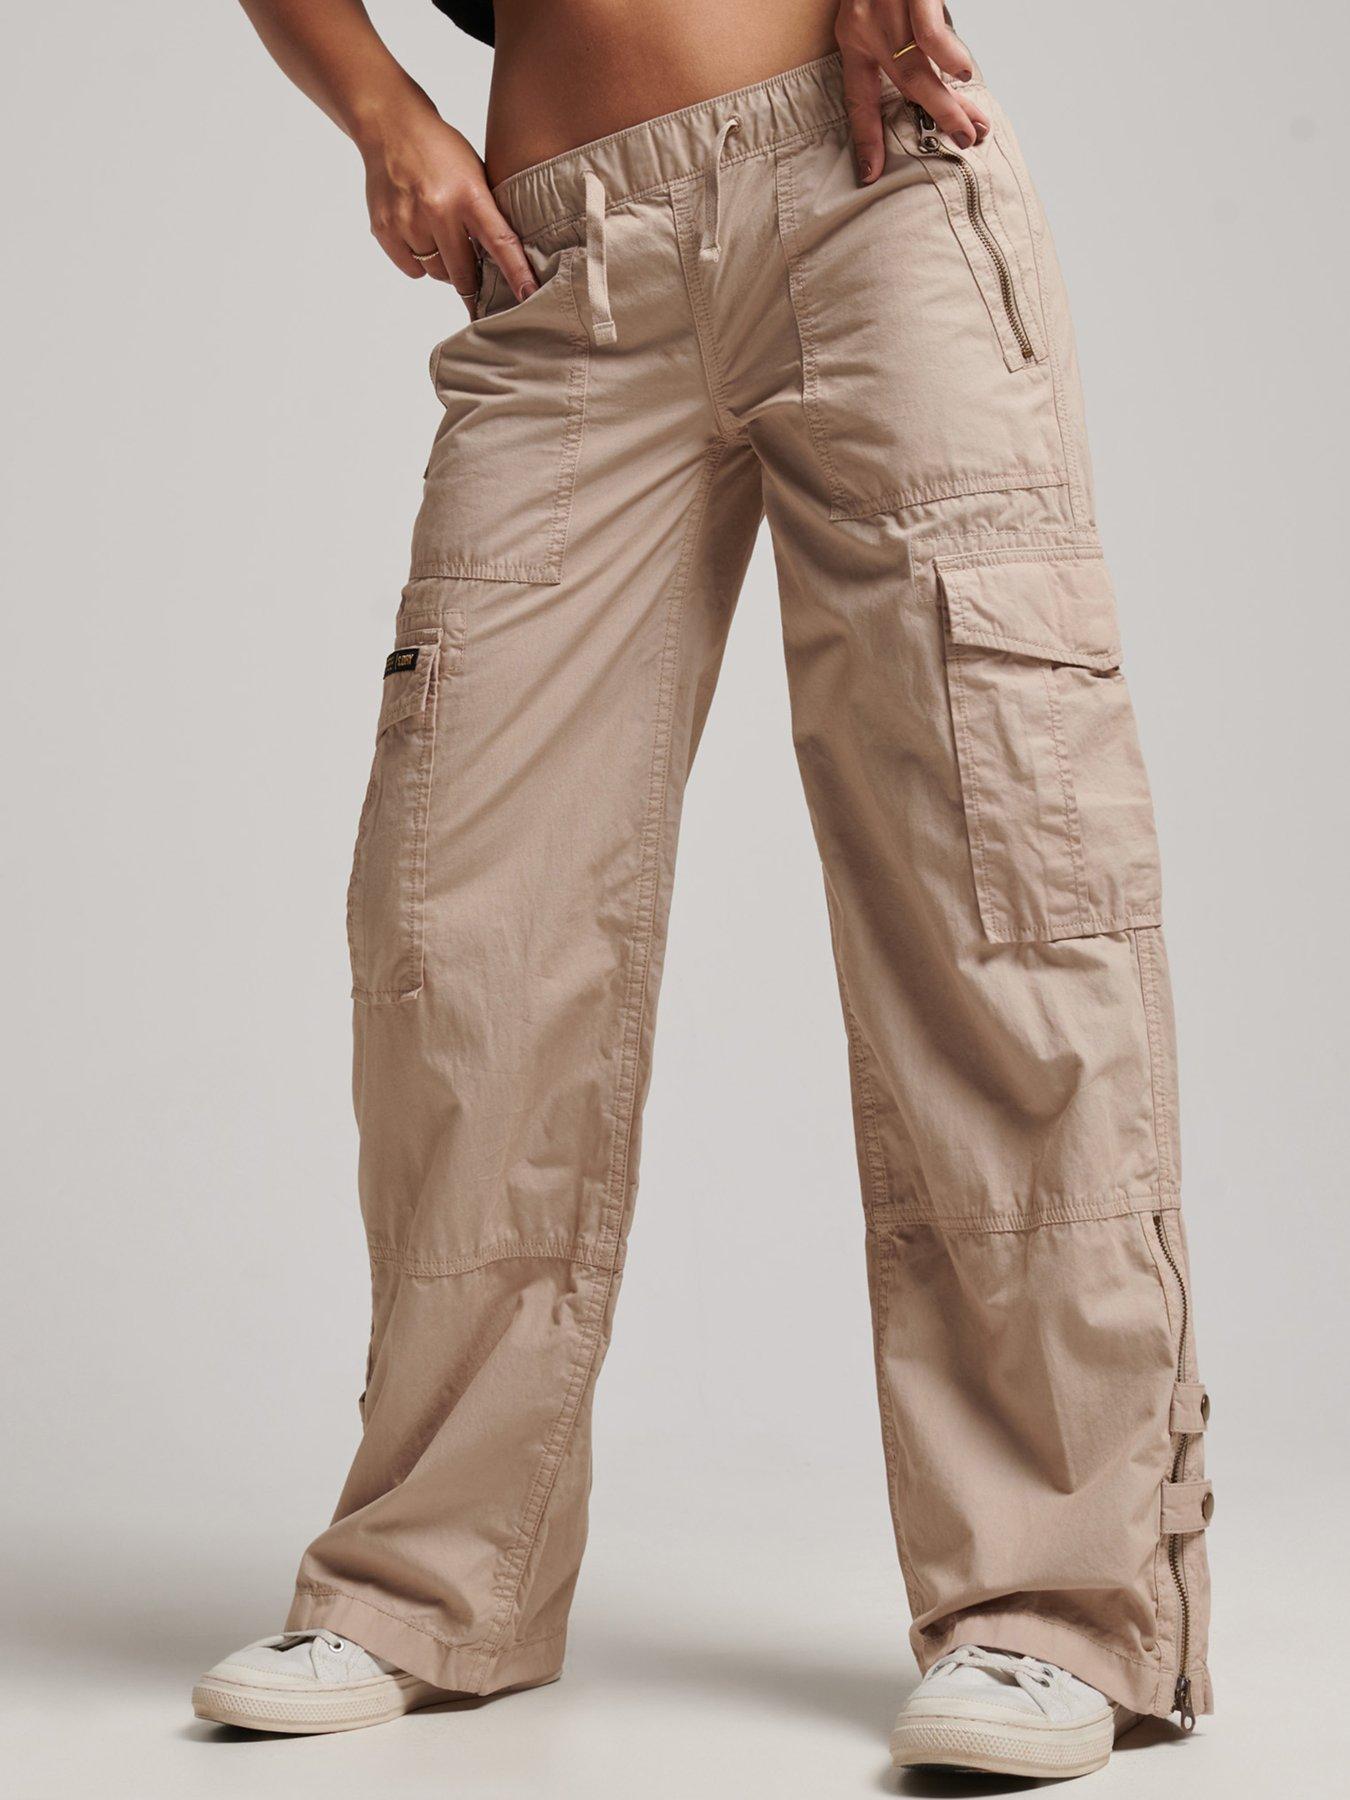 Womens Elastic Waist Combat Cargo Pants Trousers Casual Bottoms Plus Size  6-18